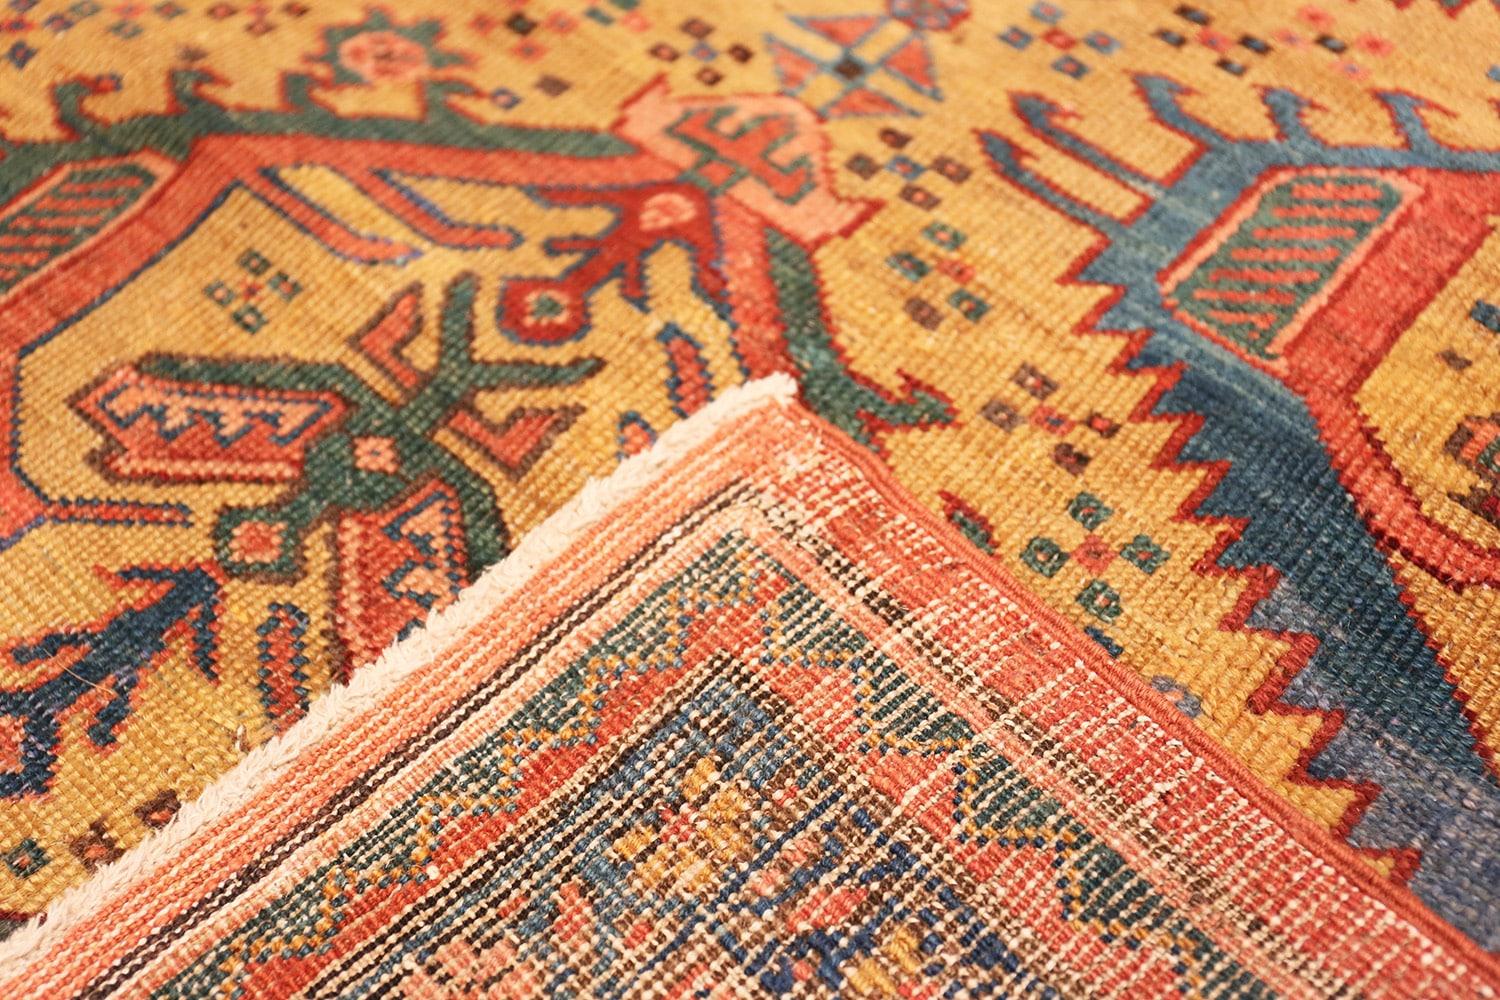 Antique Persian Bakshaish Rug. Size: 8' 6